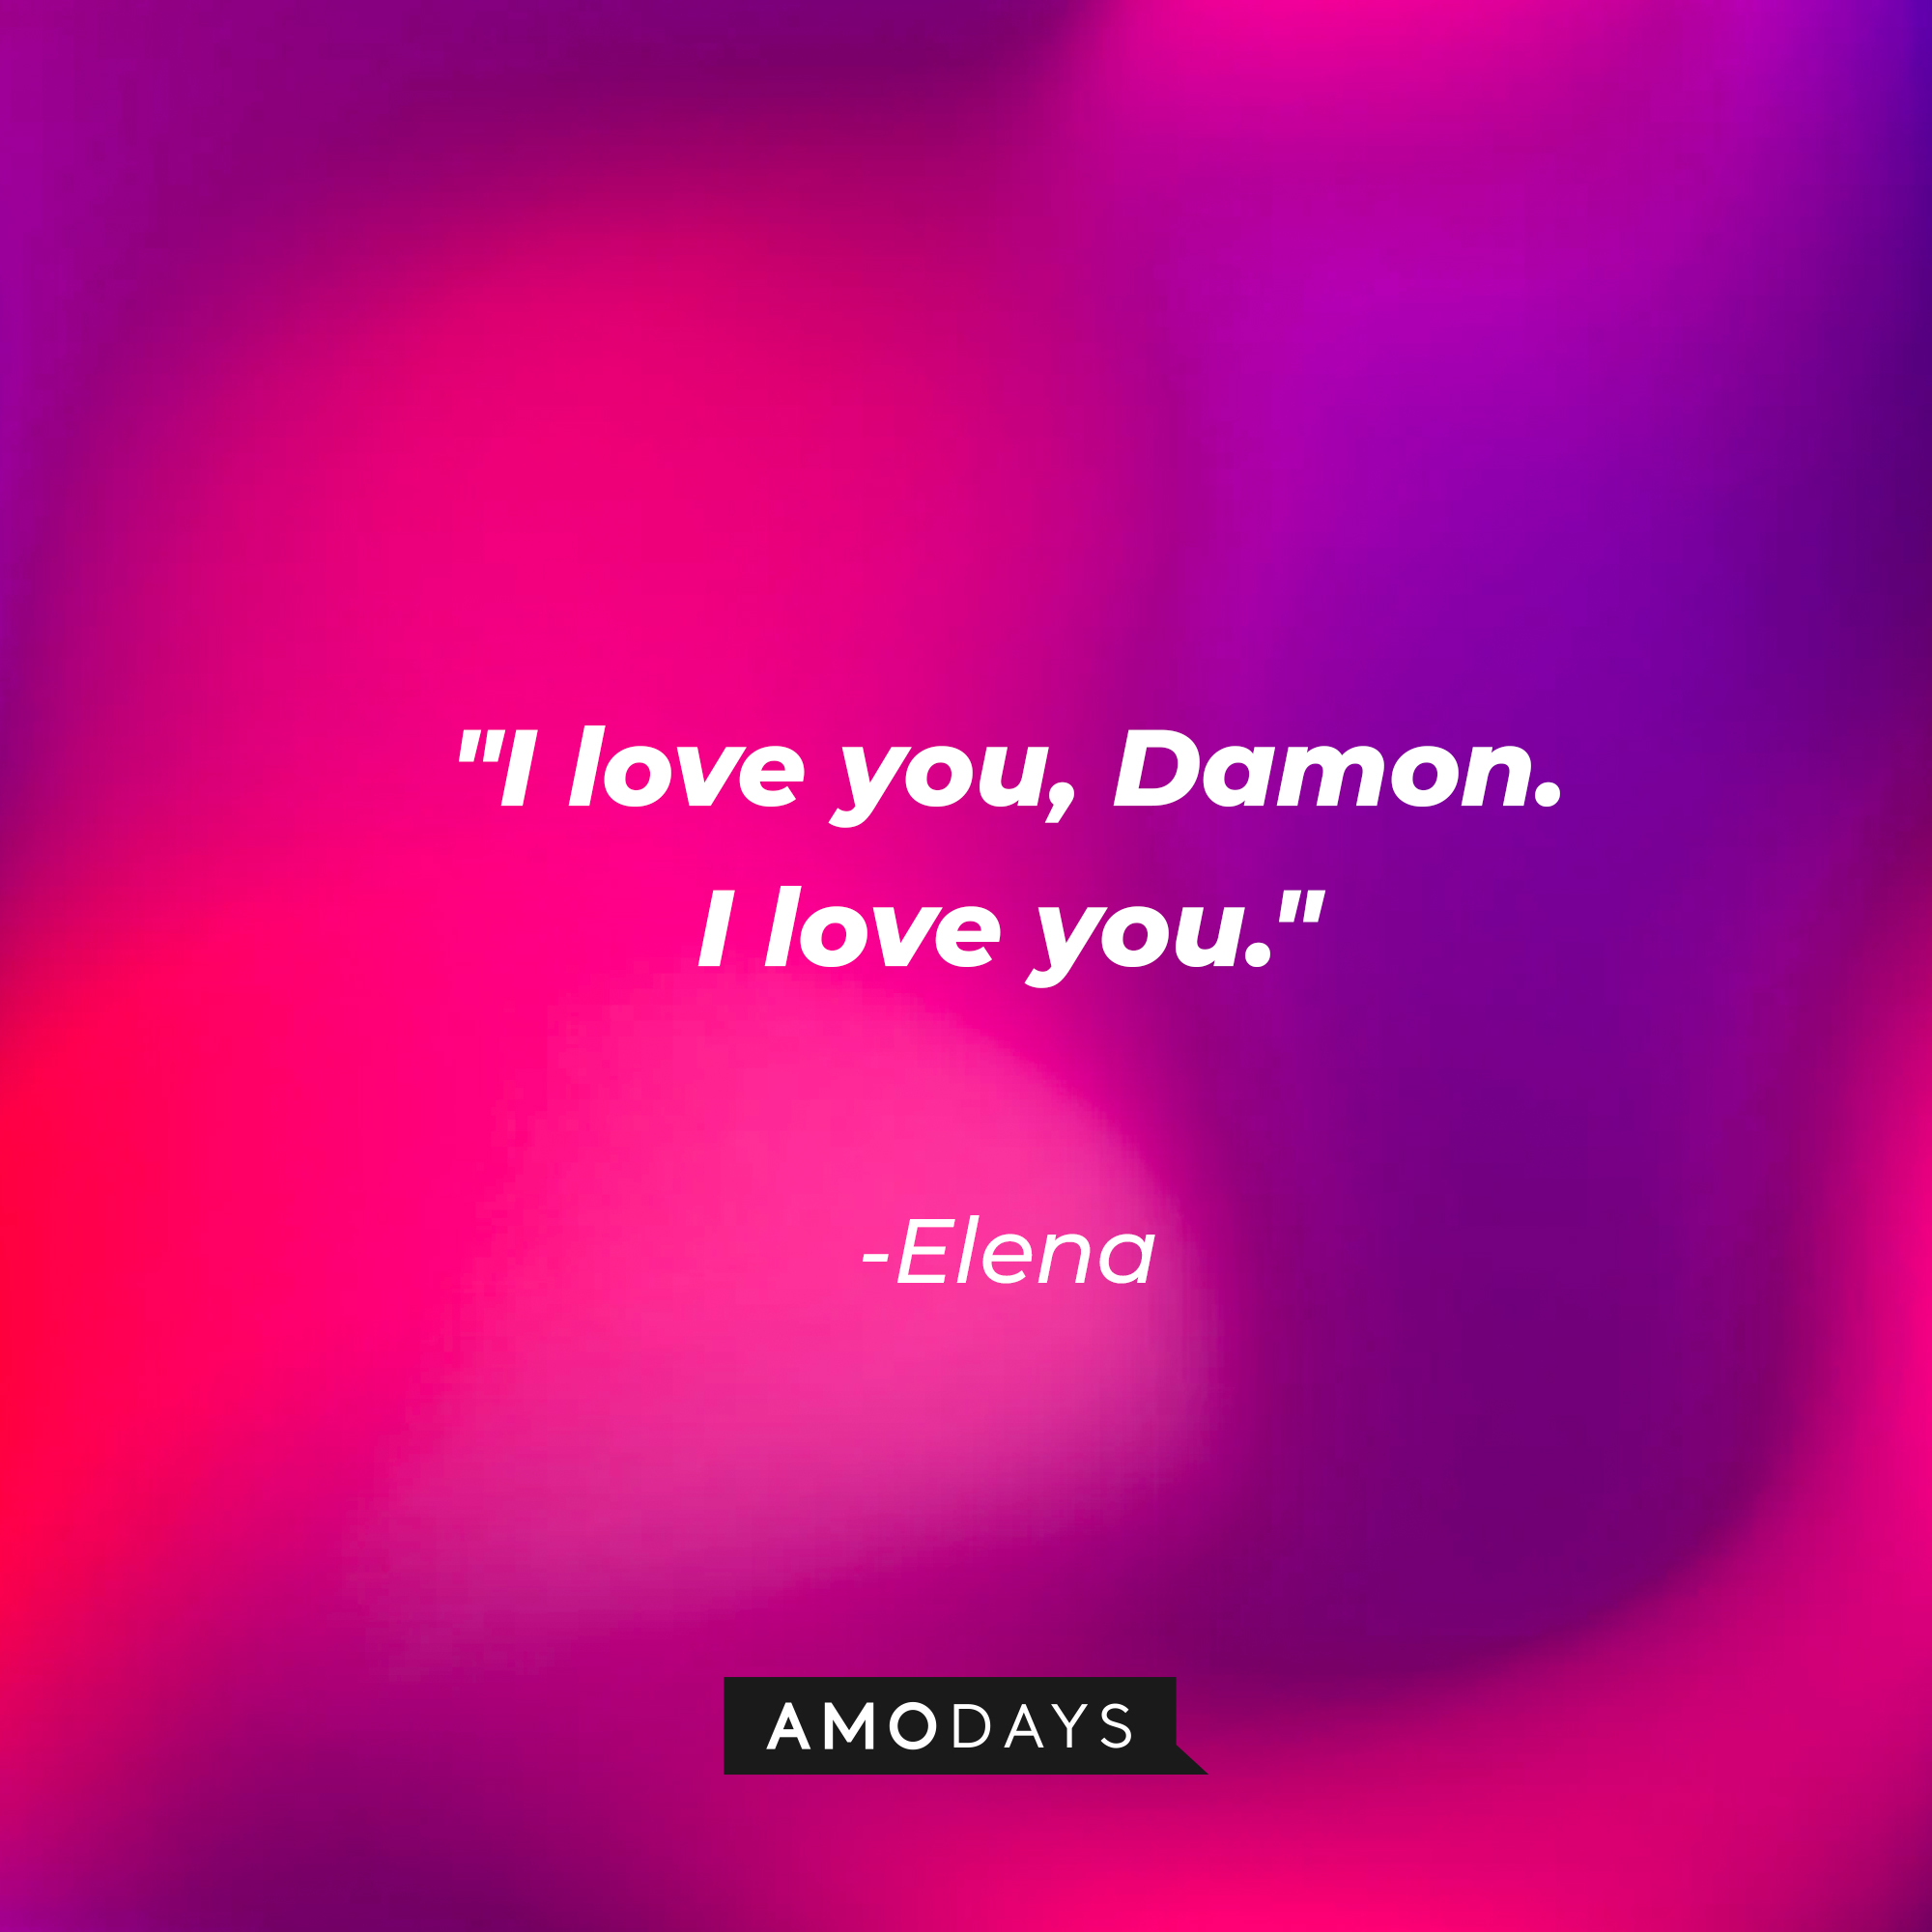 Elena's quote: "I love you, Damon. I love you." | Source: Amodays